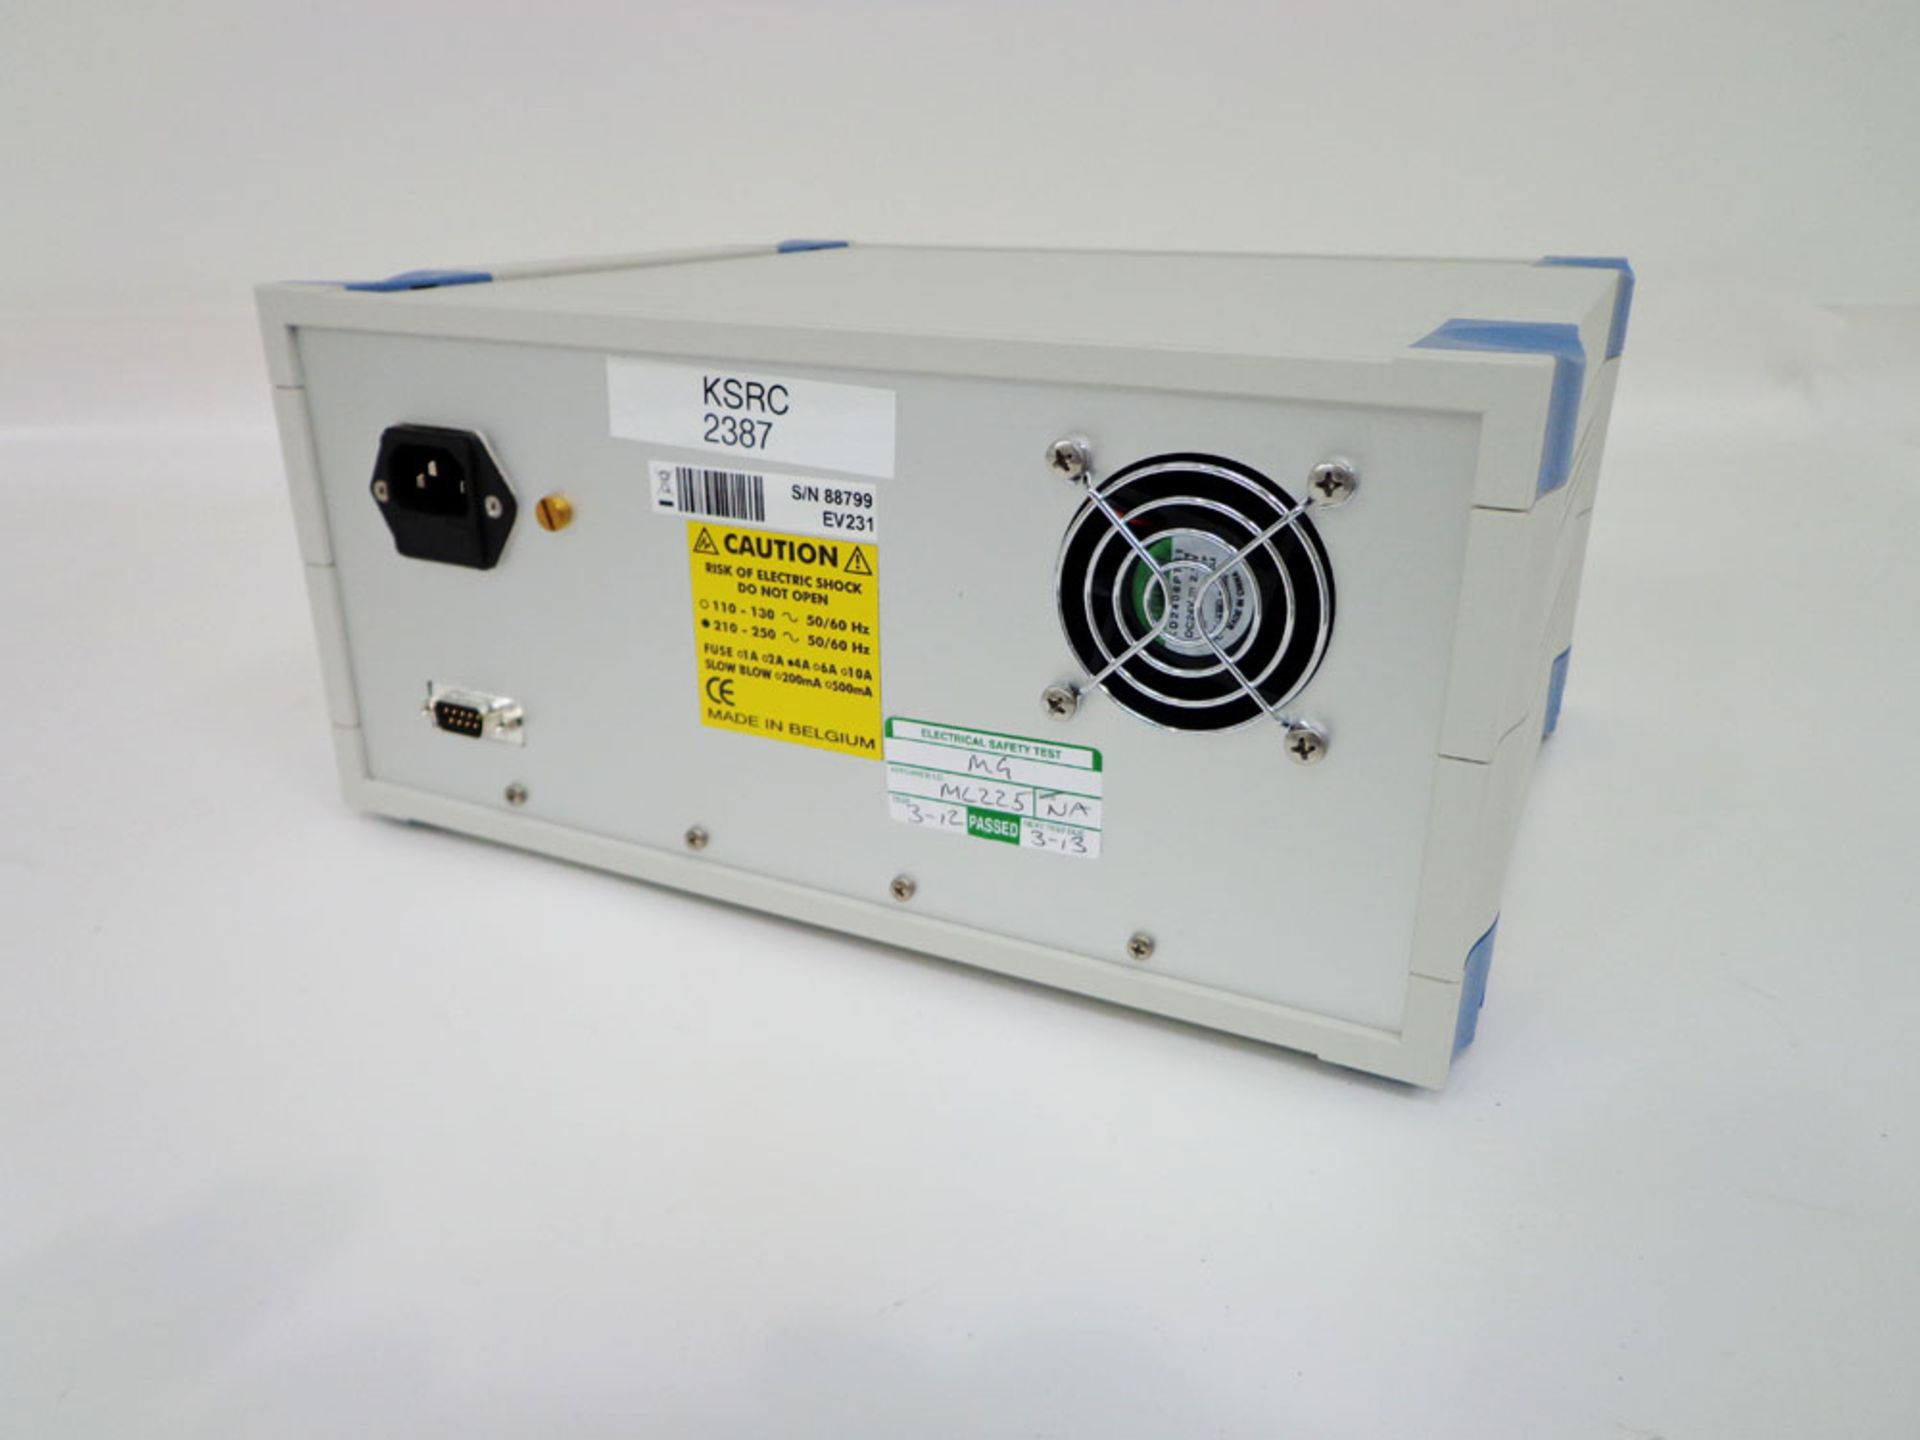 Consort EV231 Electrophoresis Power Supply, serial number 88799 (Ref: WA11806) - Image 3 of 4